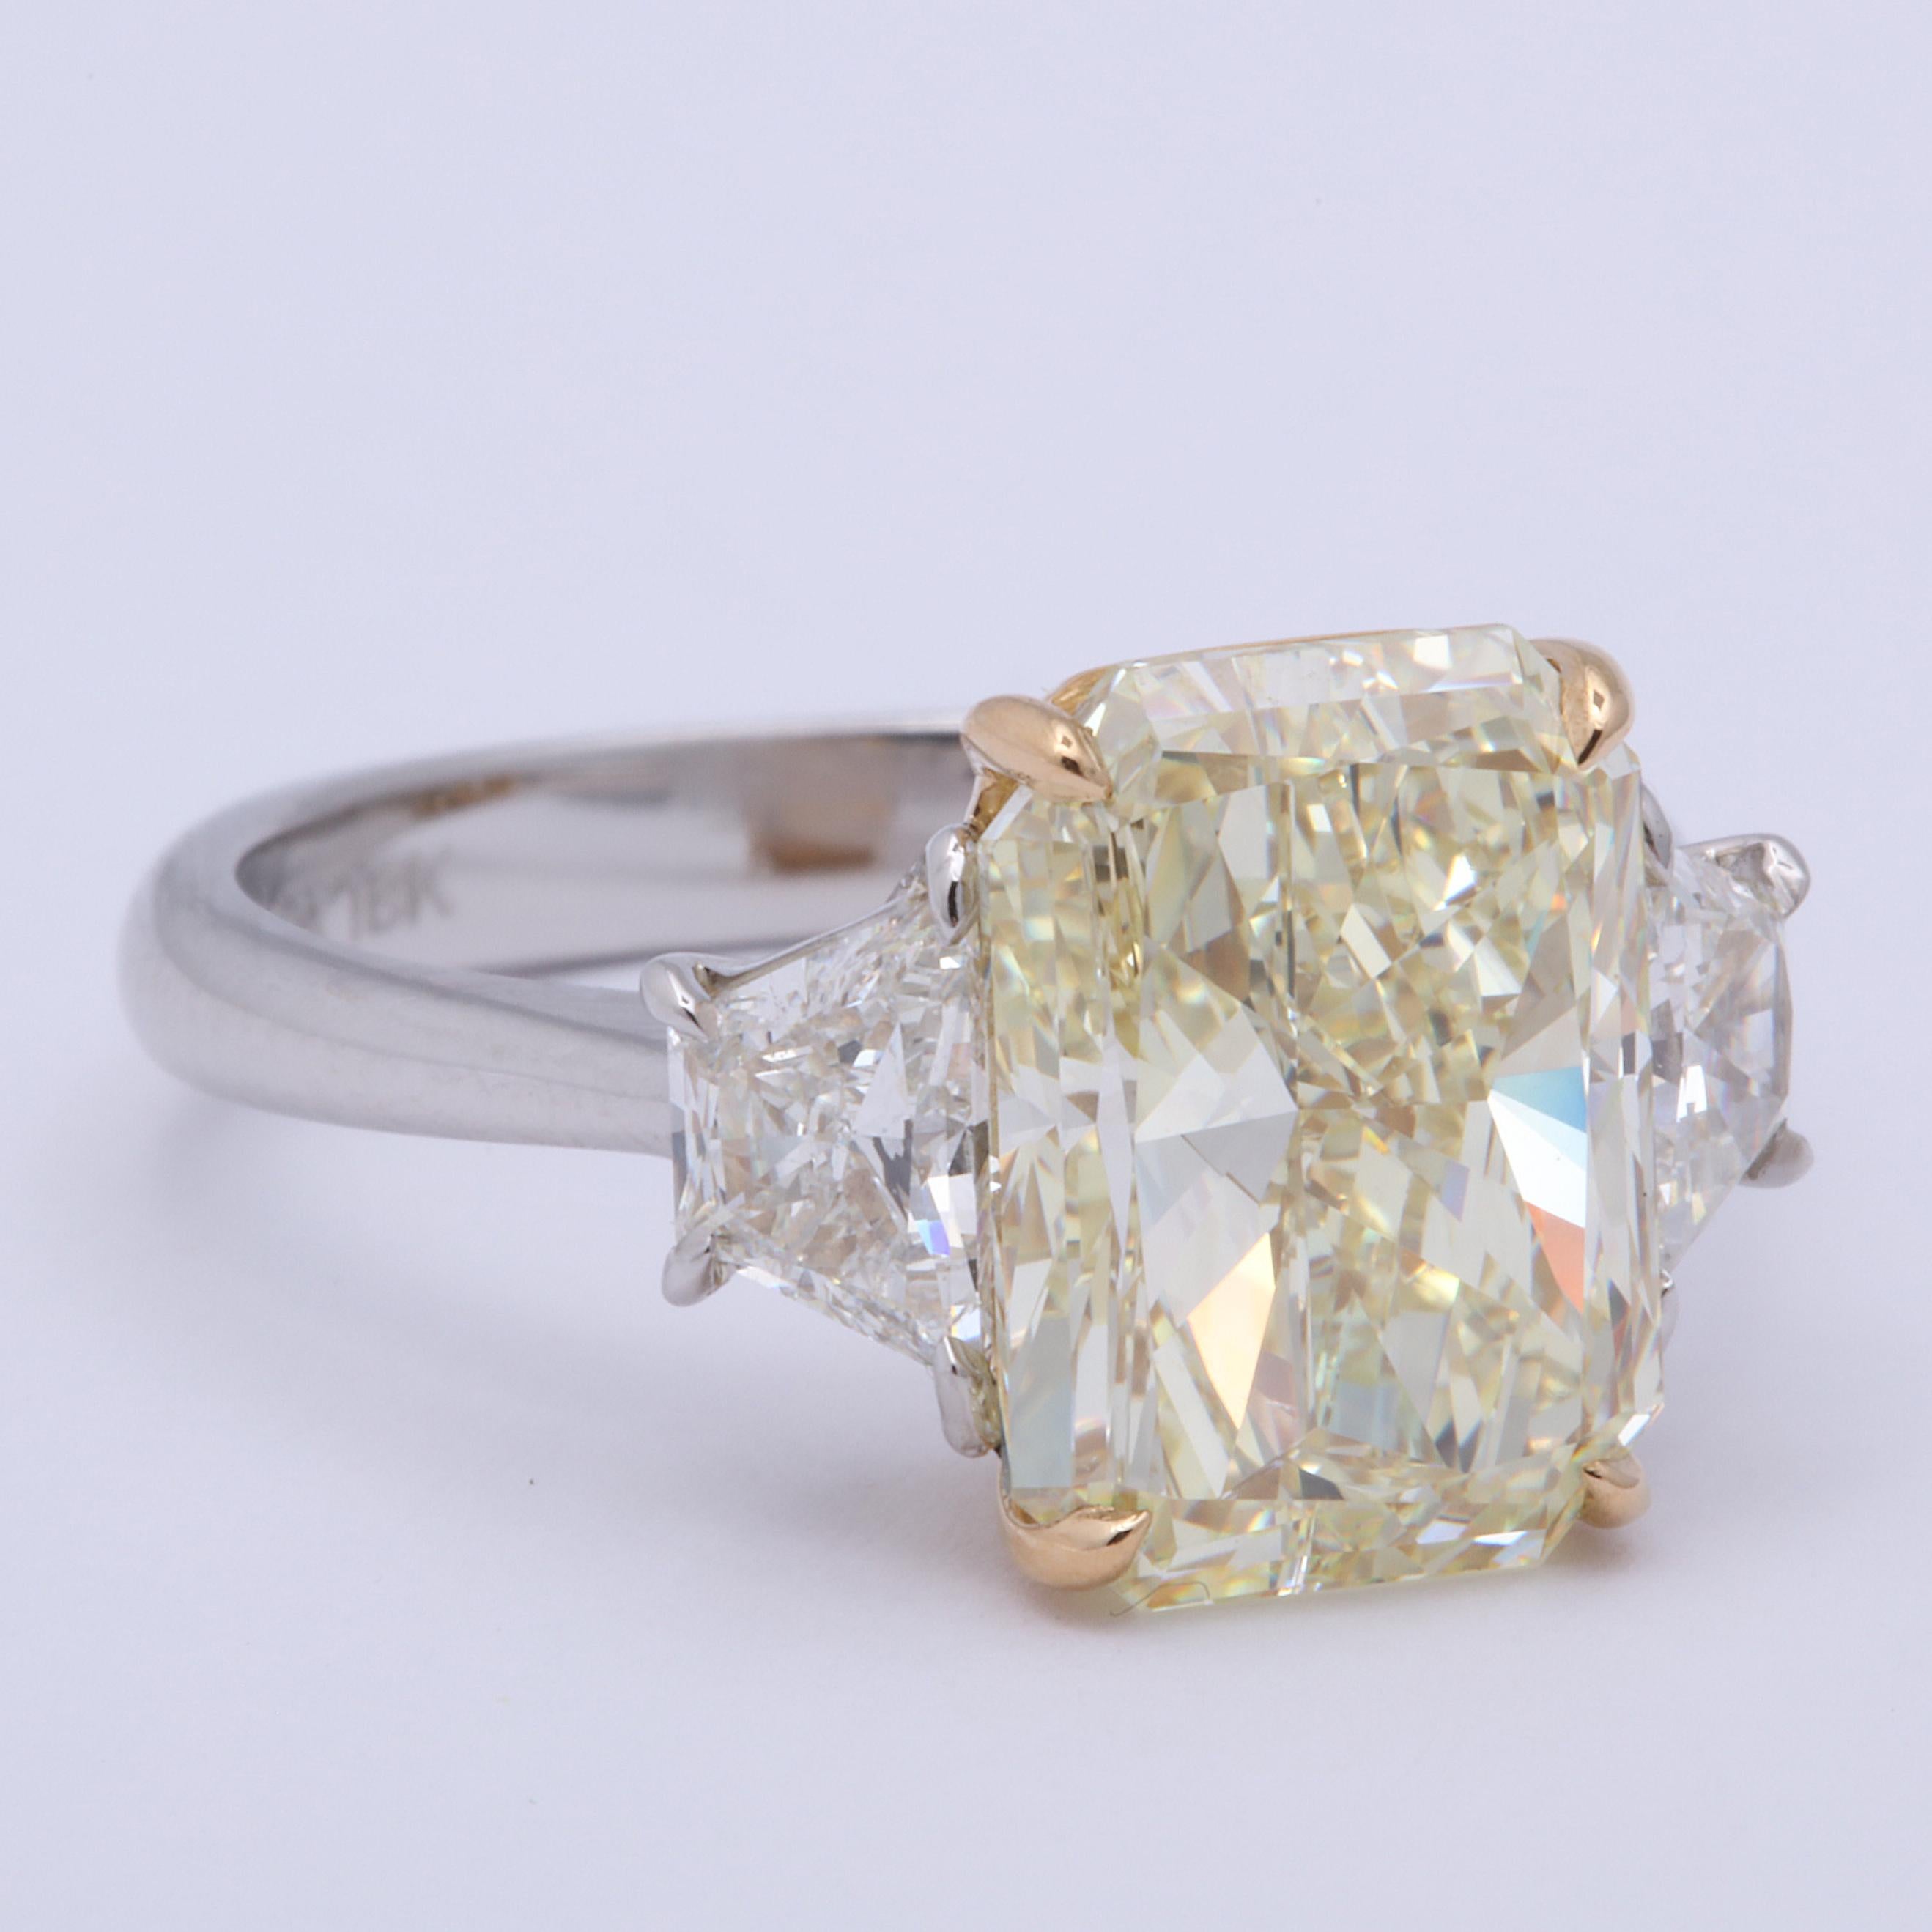 5 carat canary diamond ring